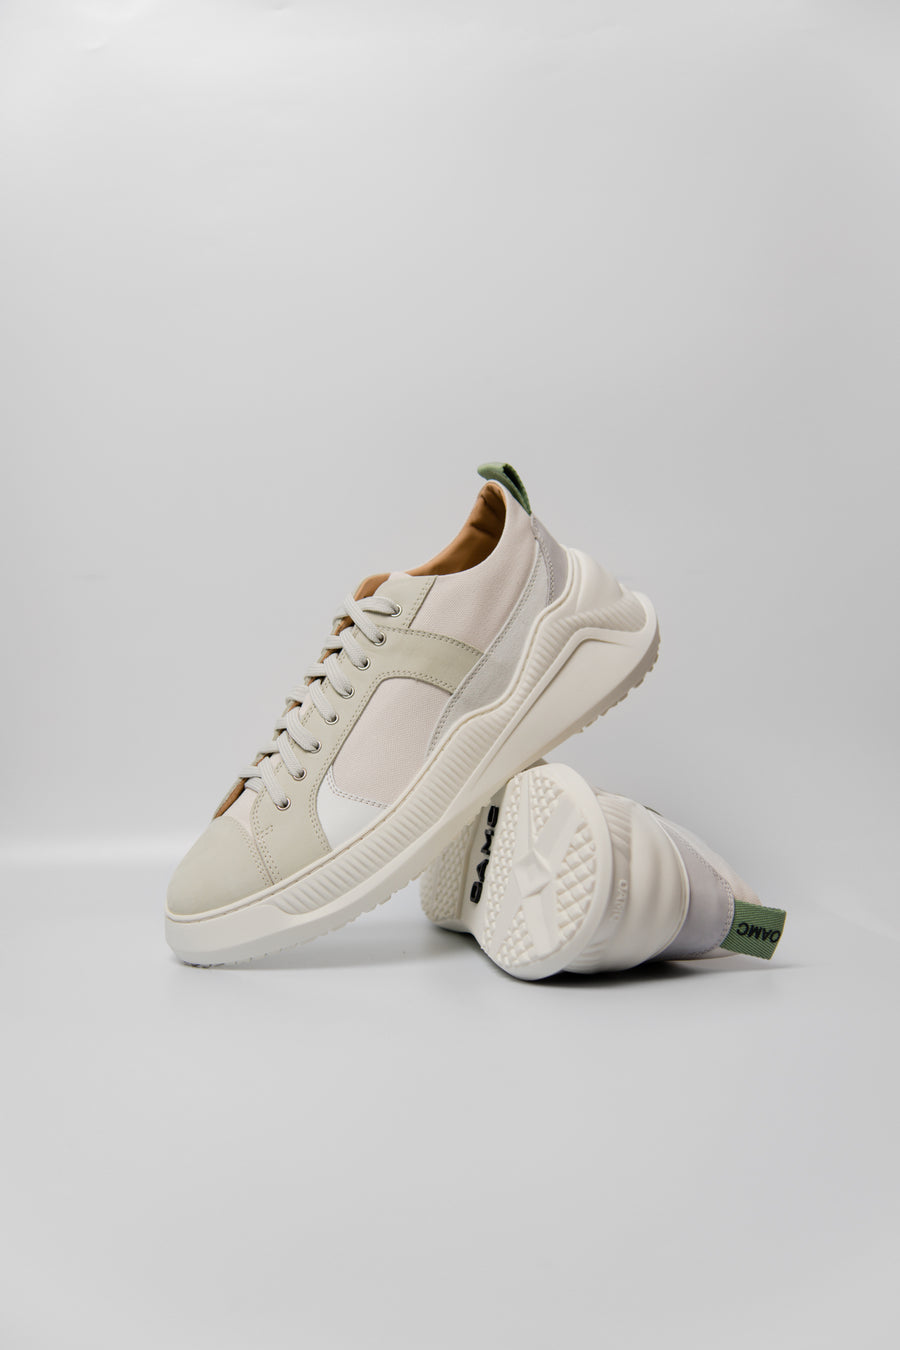 Free Solo Low Top Sneaker Grey/White